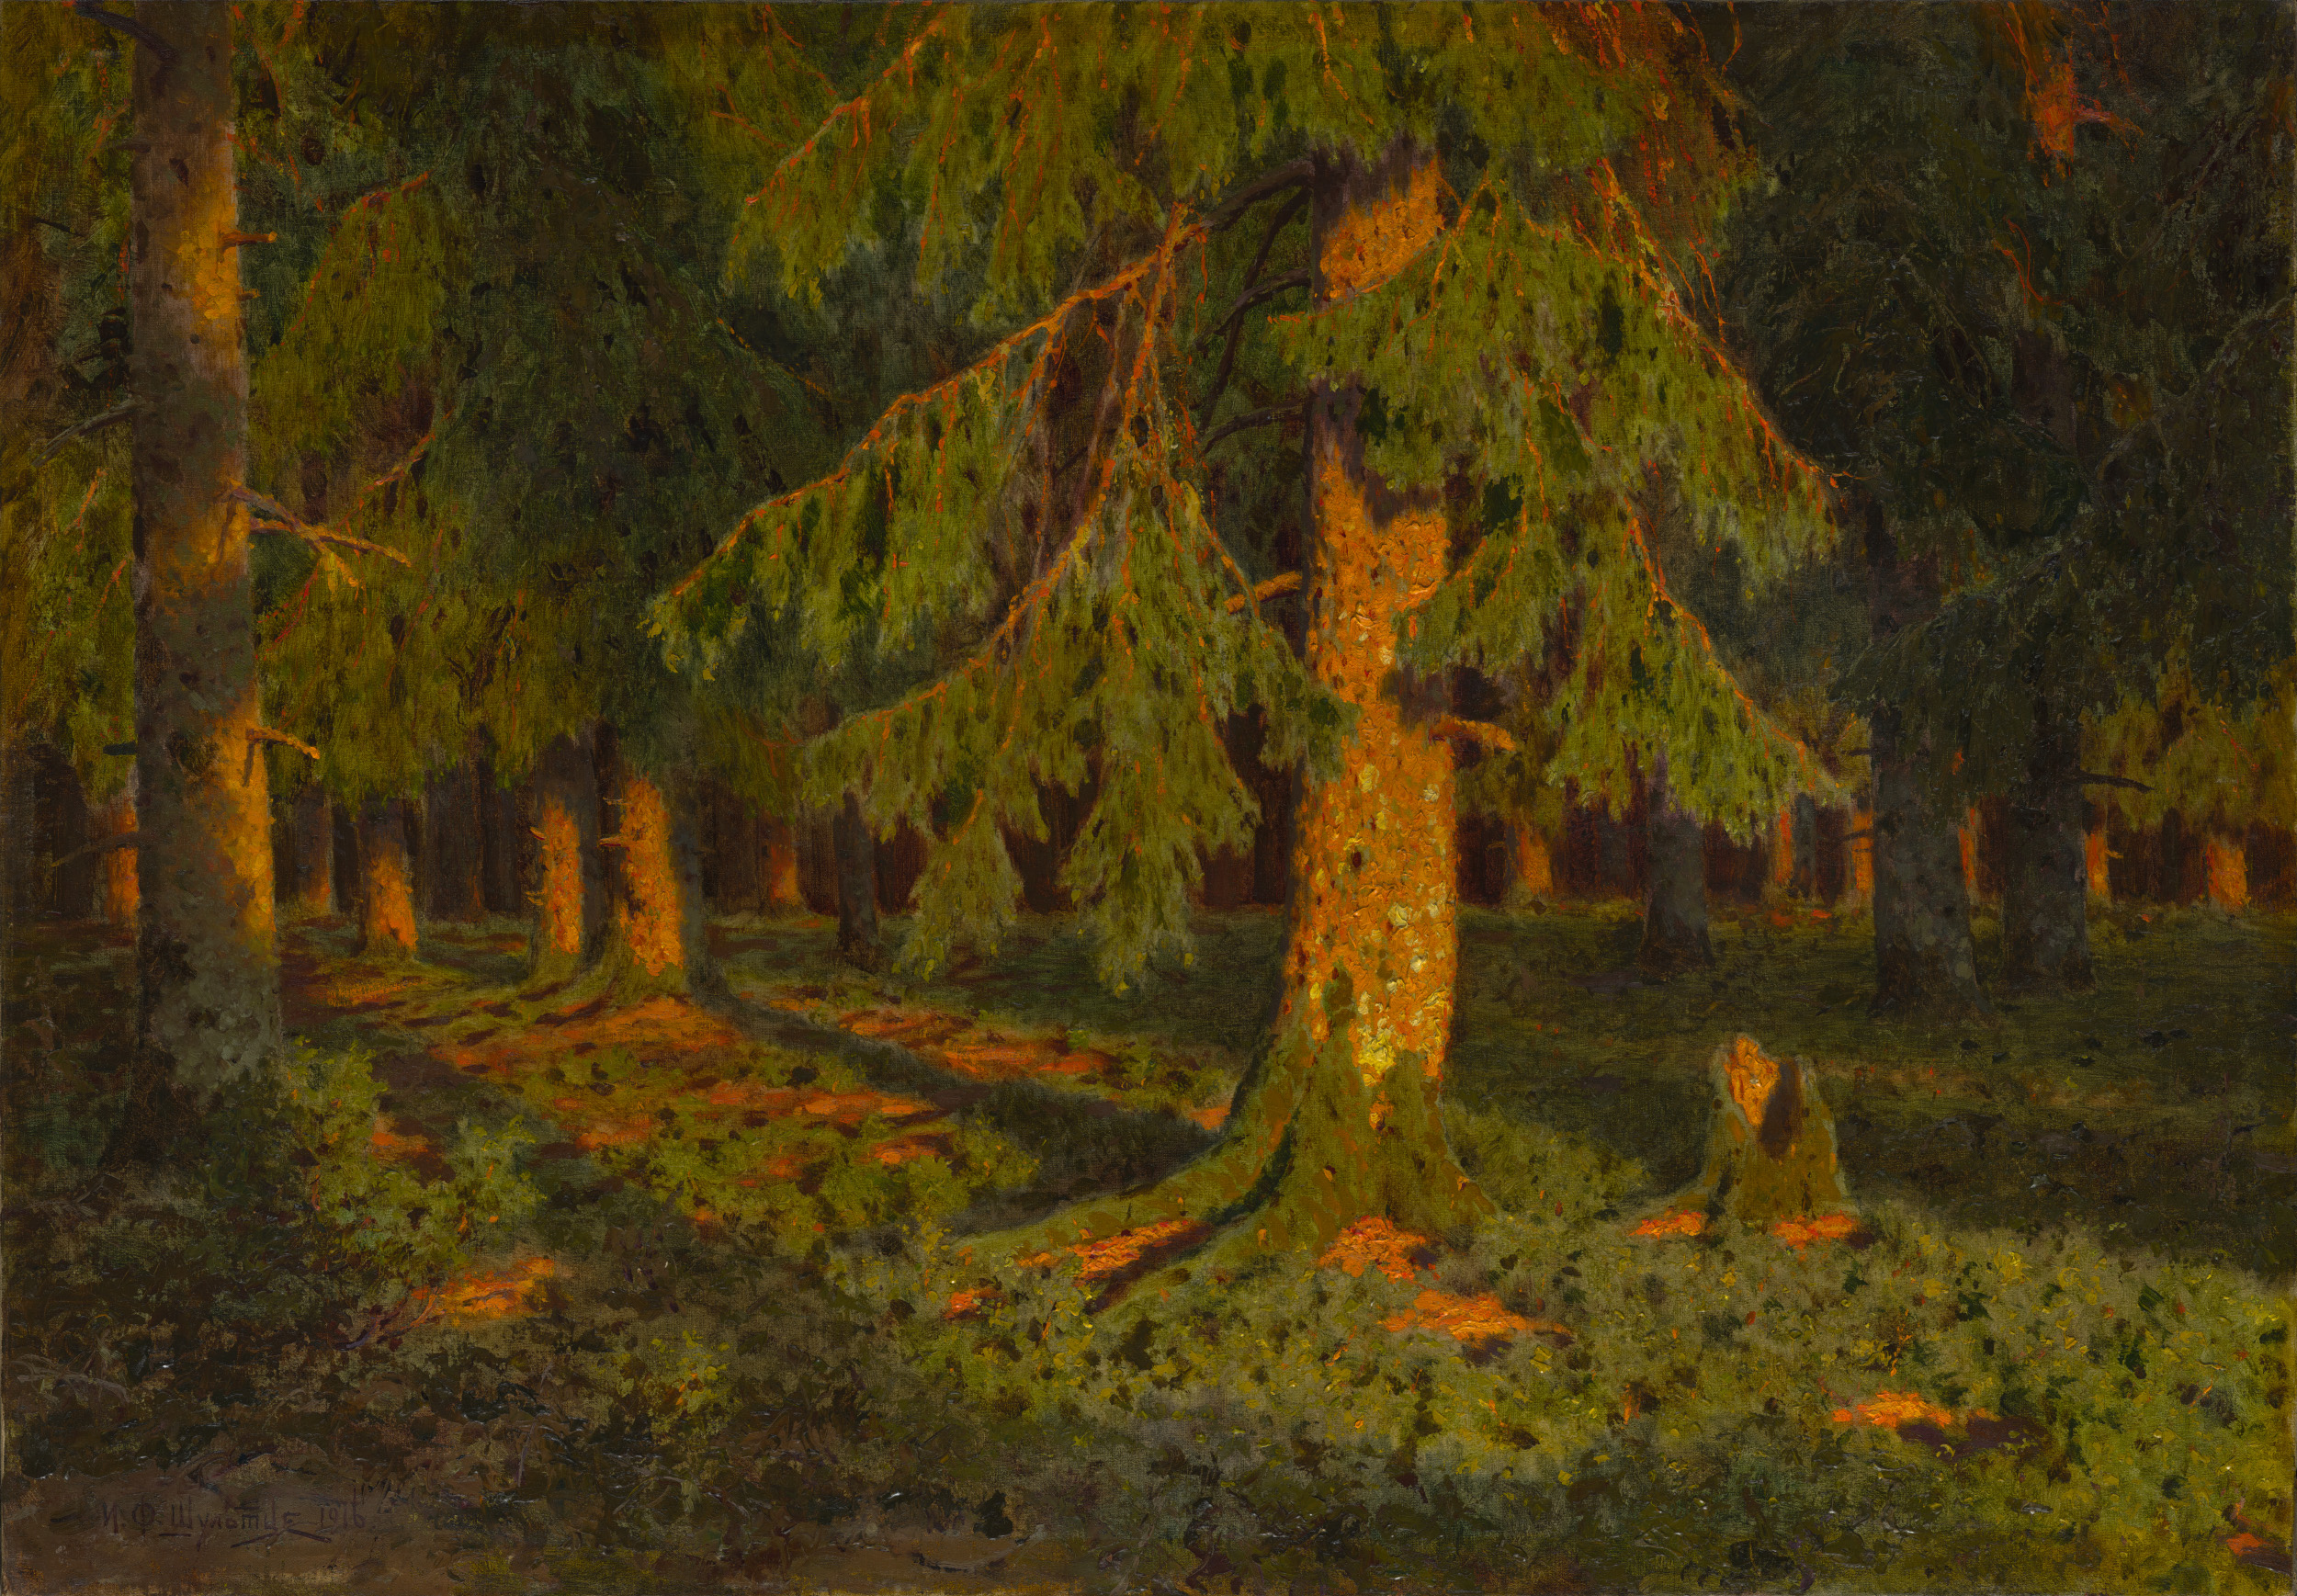 Иван ШУЛЬТЦЕ, Солнце в лесу, 1916